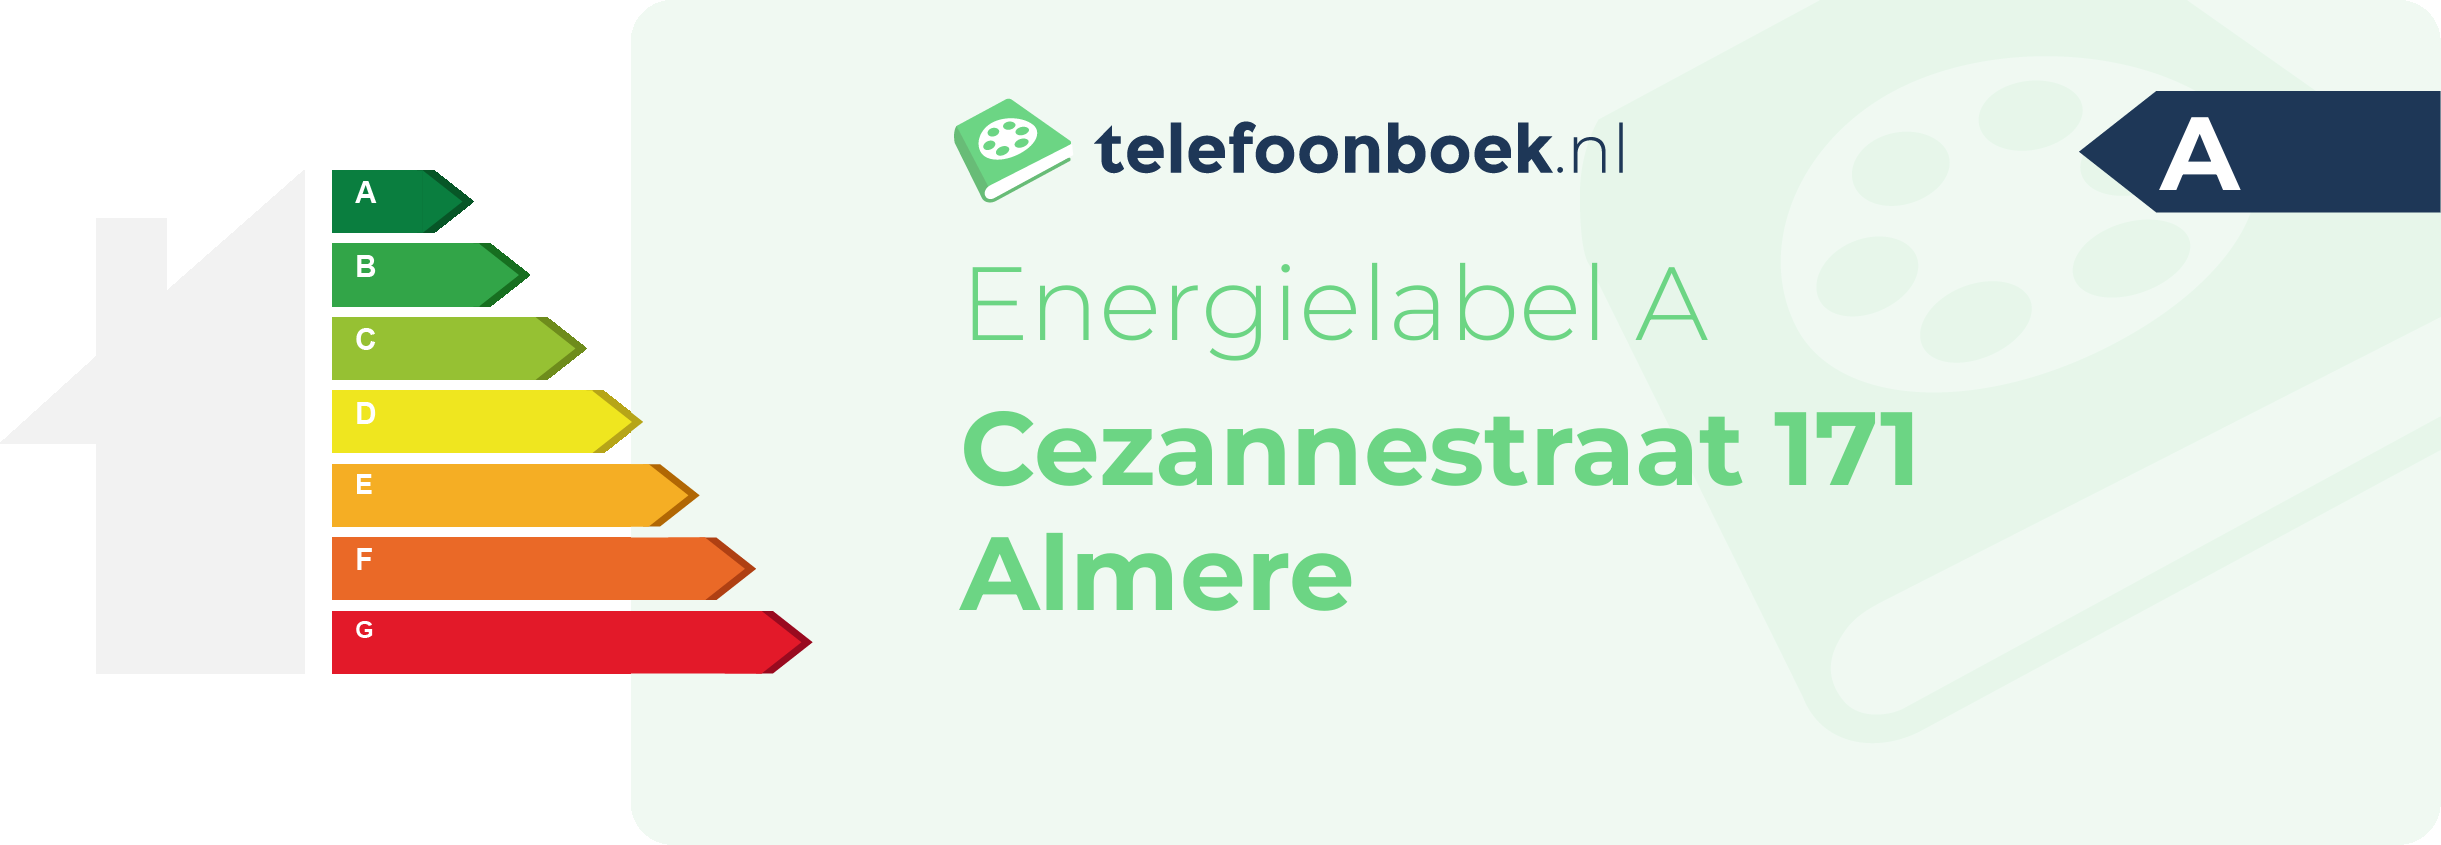 Energielabel Cezannestraat 171 Almere